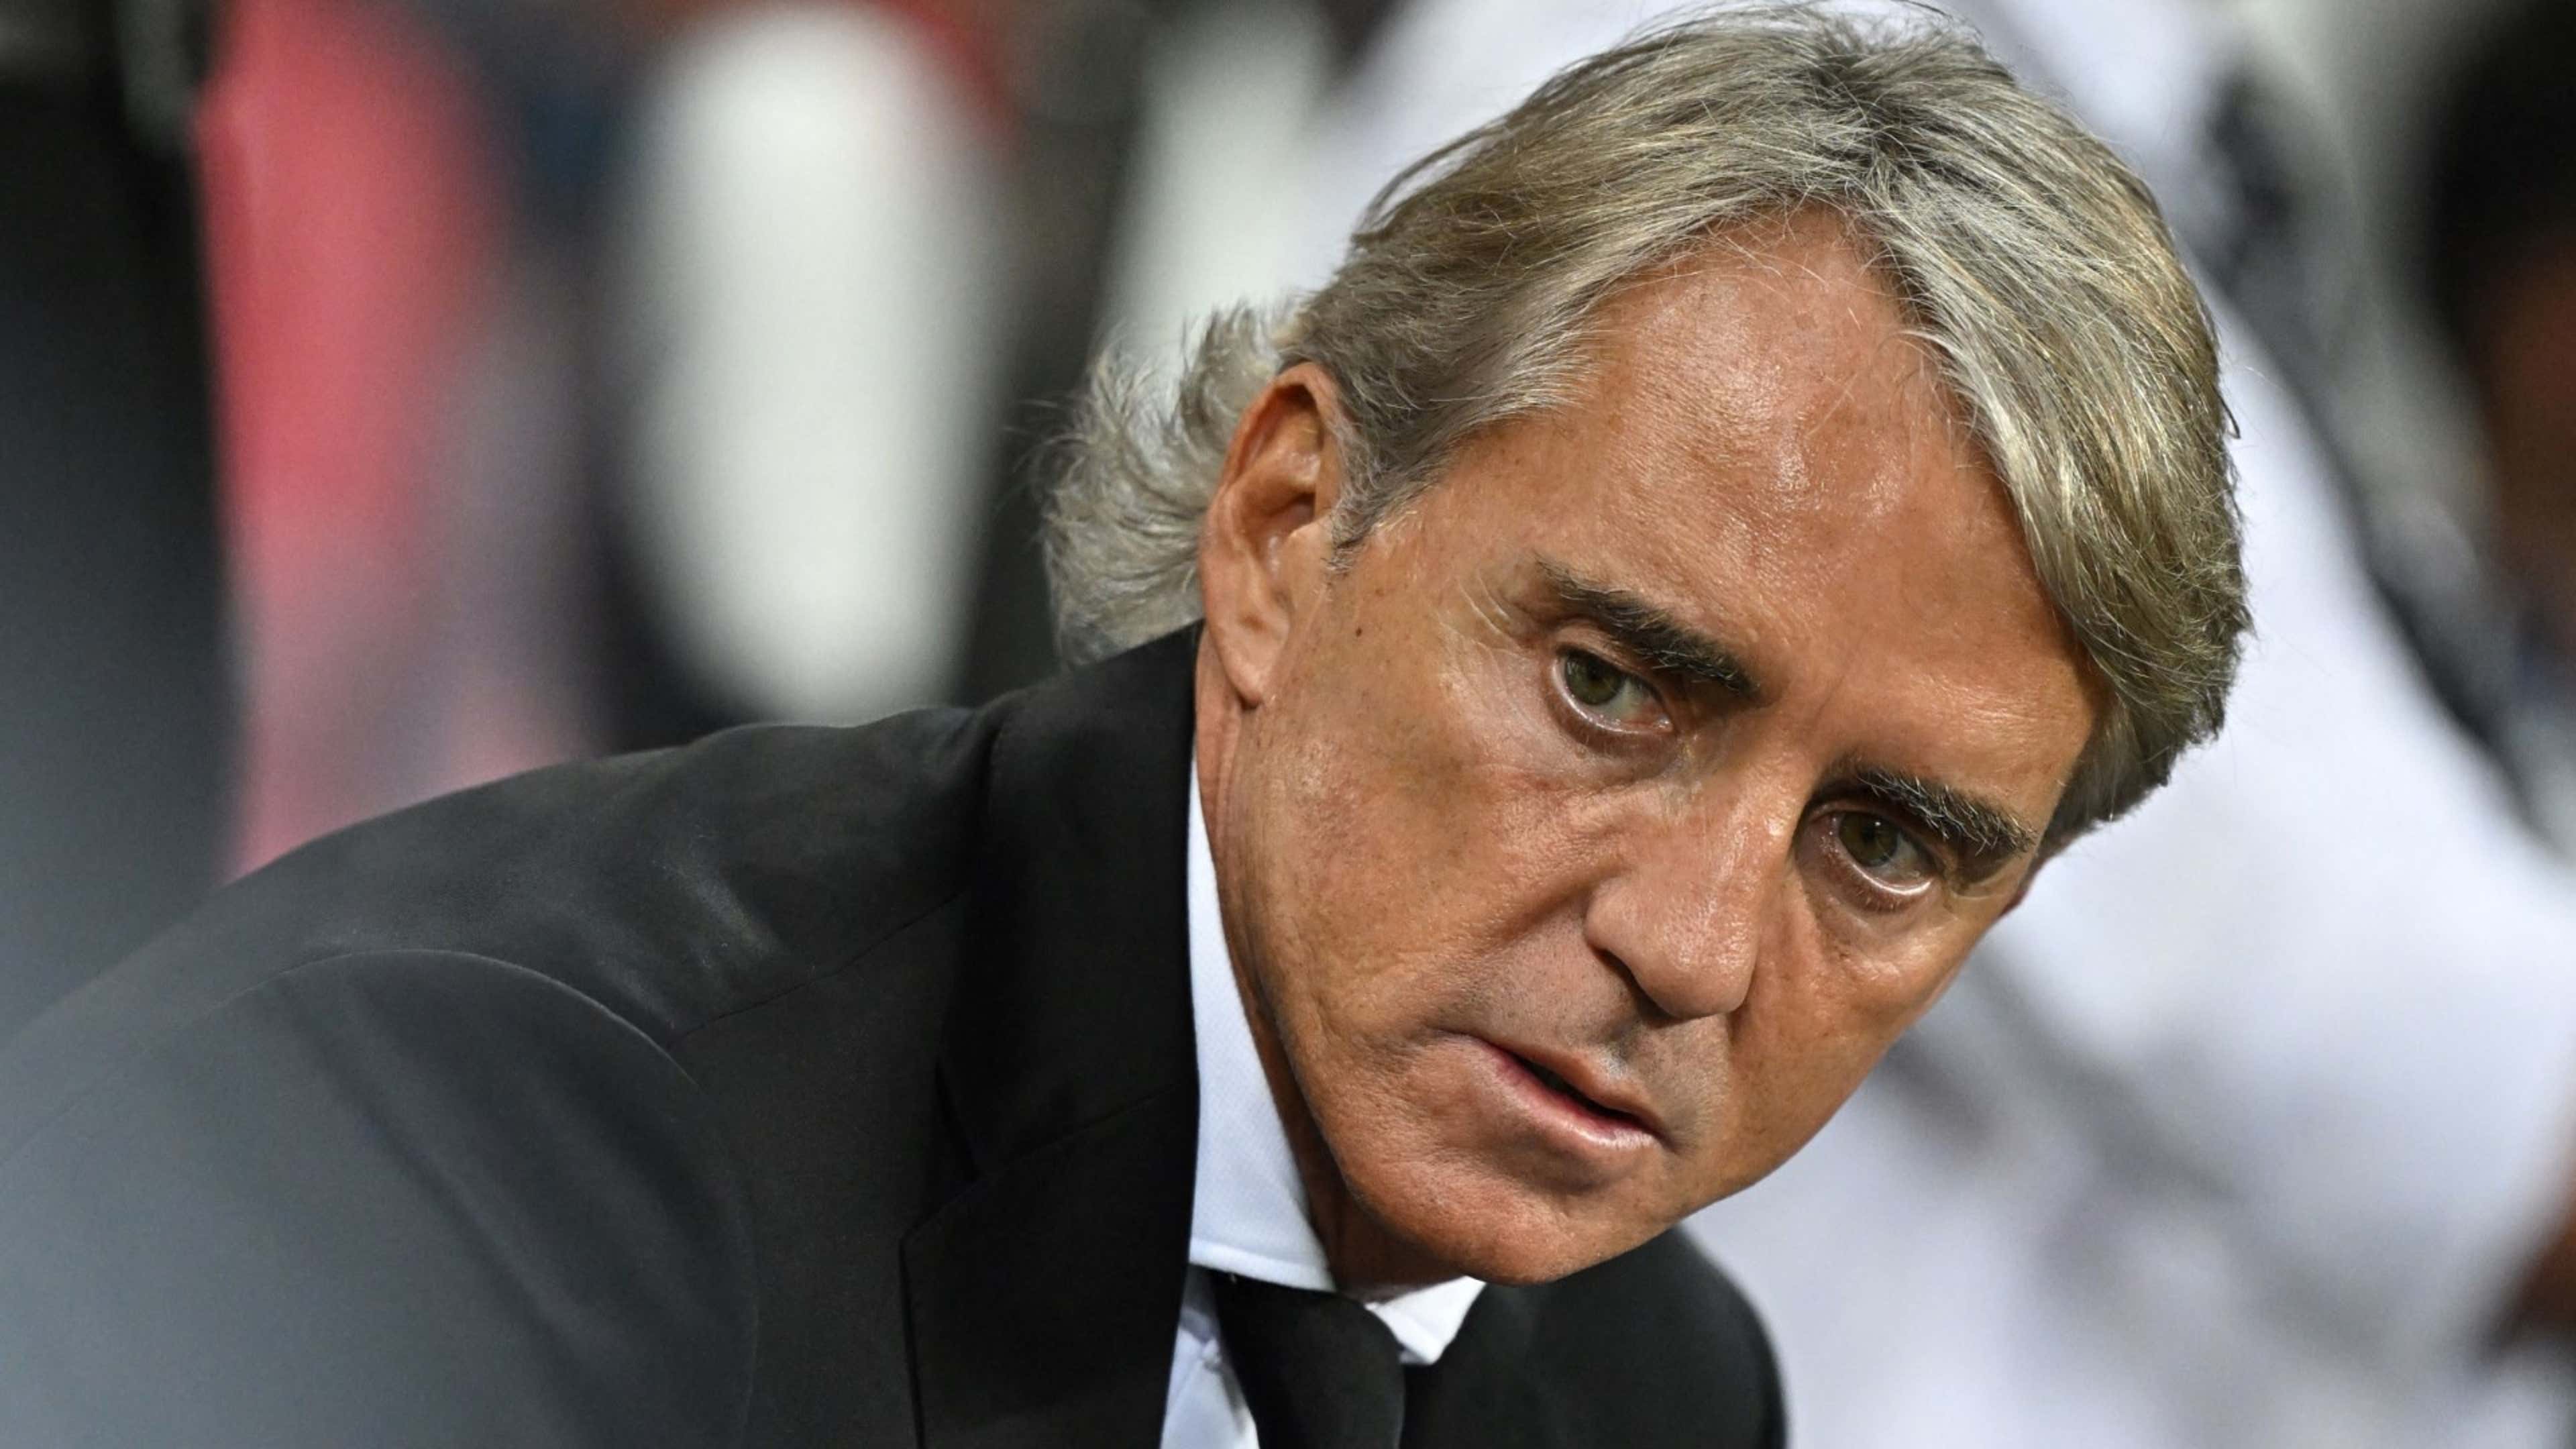 Saudi Arabia name Mancini as new national team coach